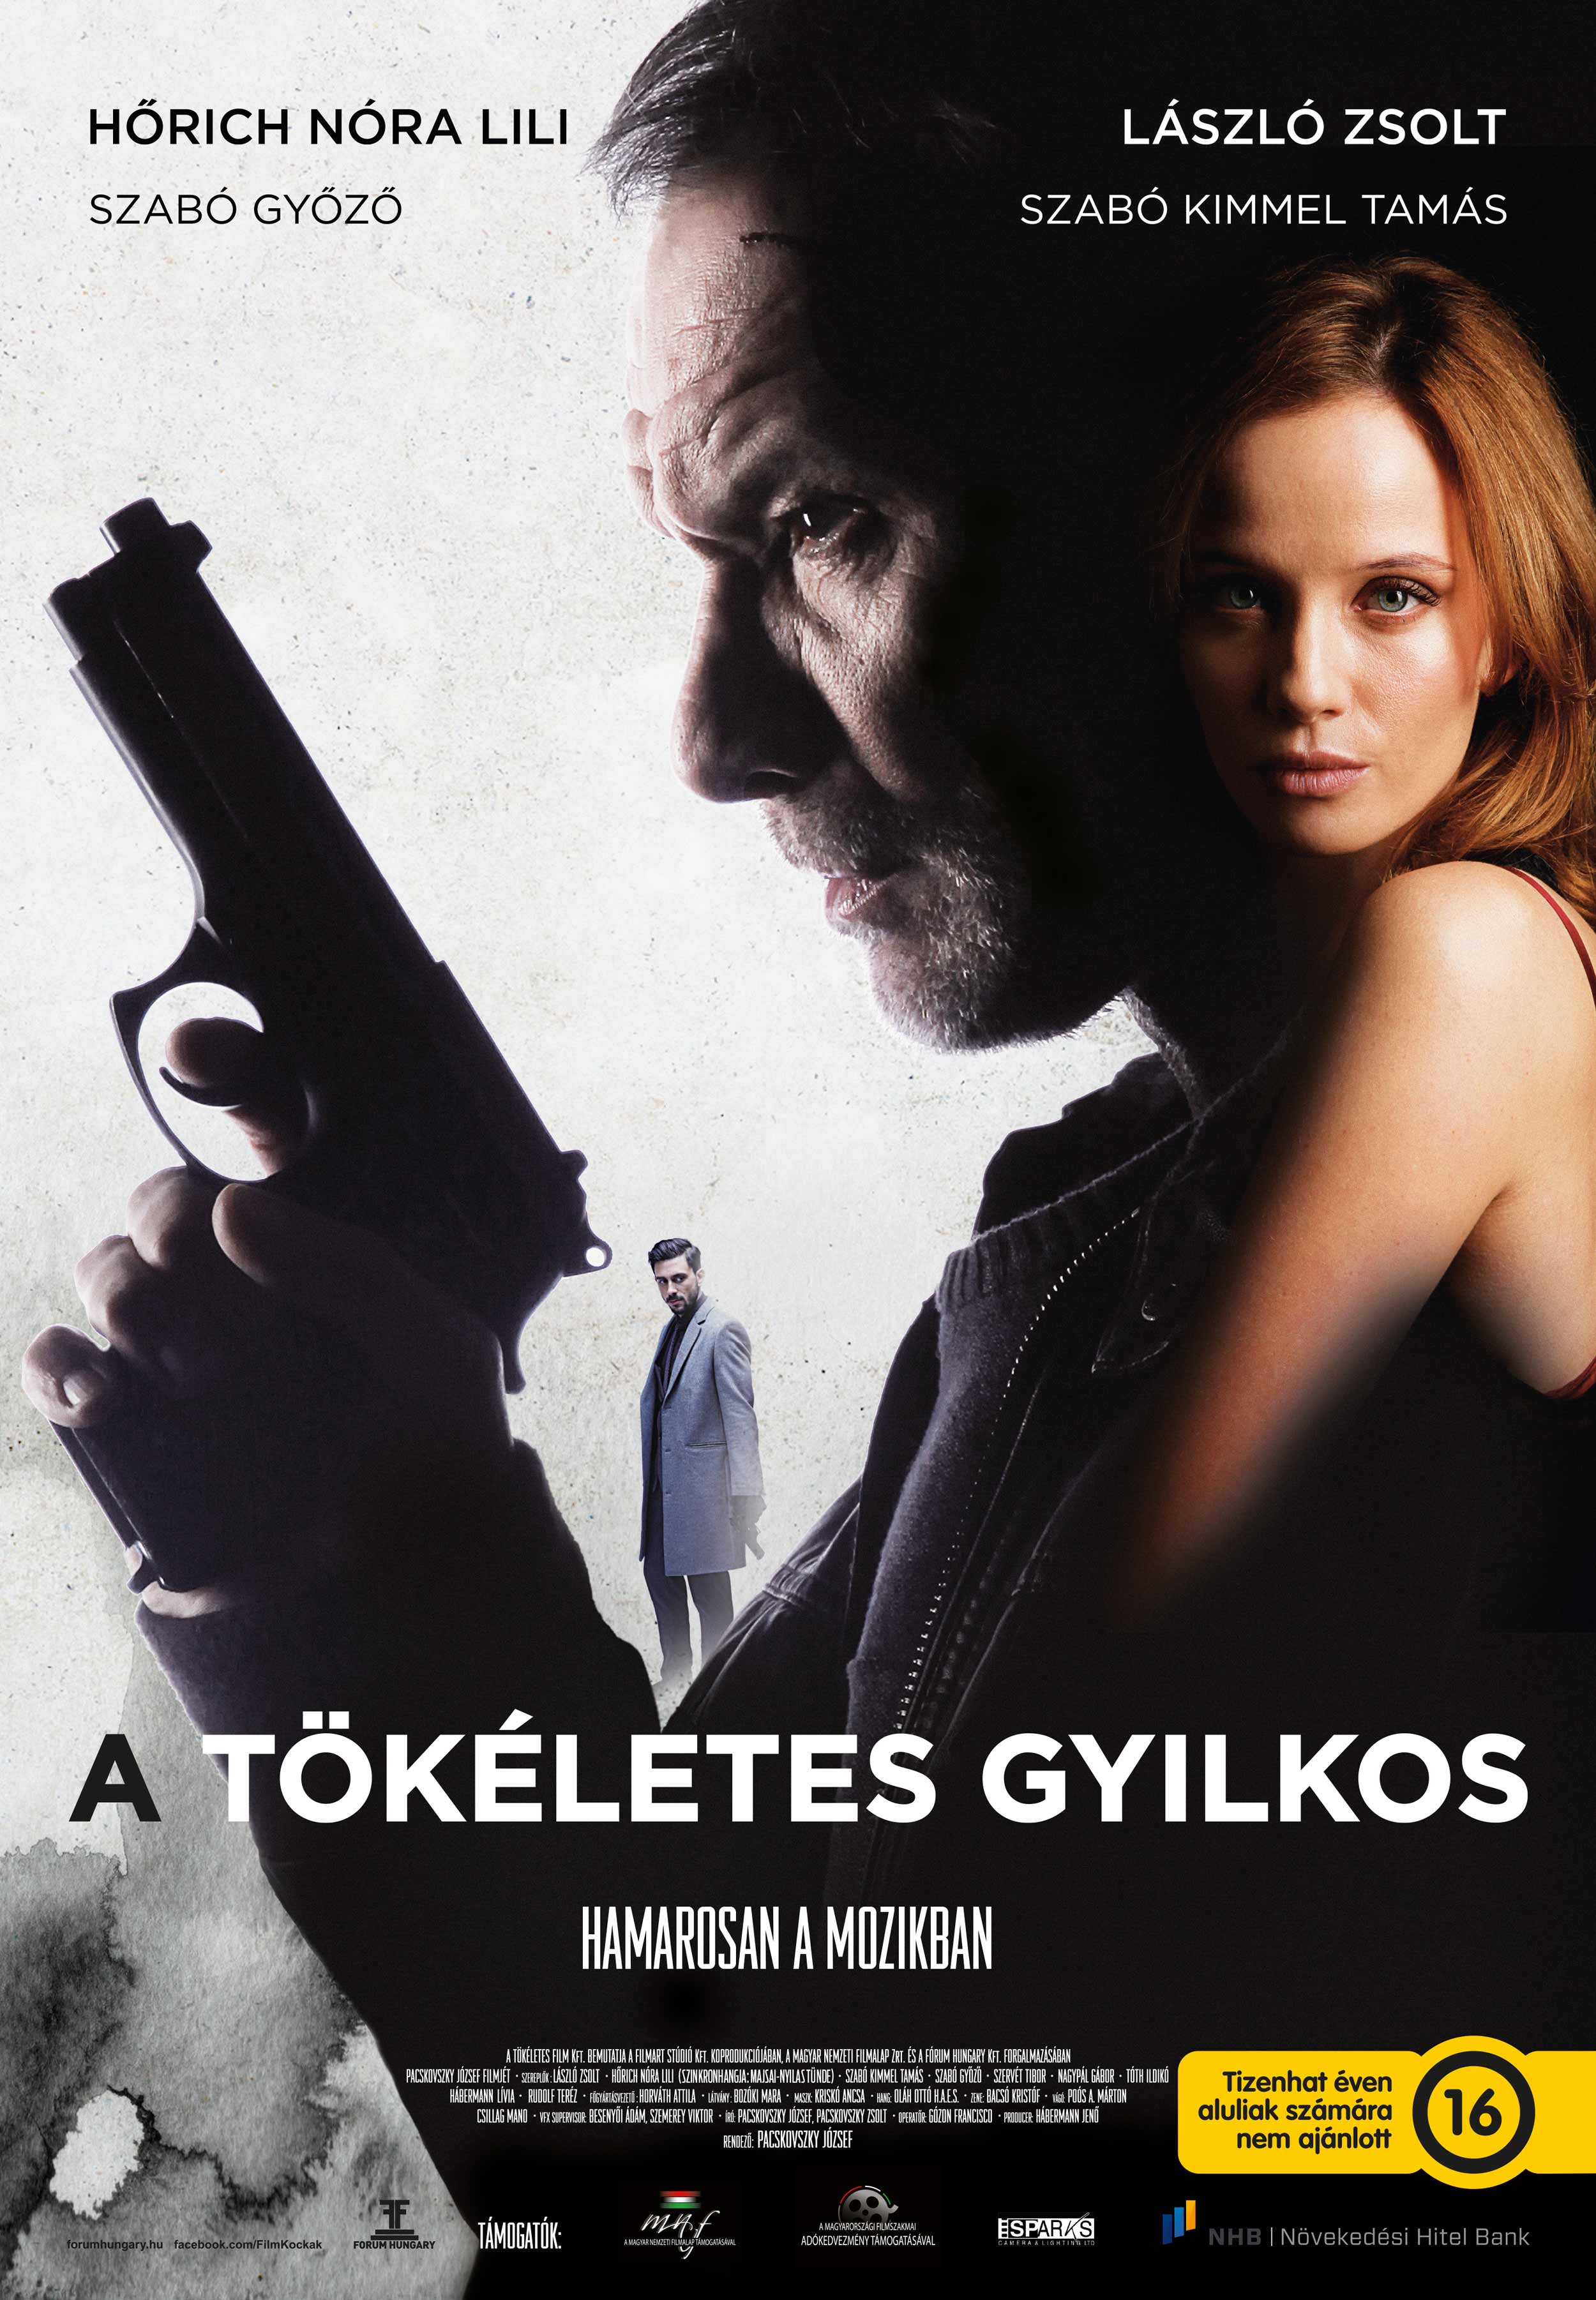 tokeletes_gyilkos_b1_teaser_16v_kicsi.jpg